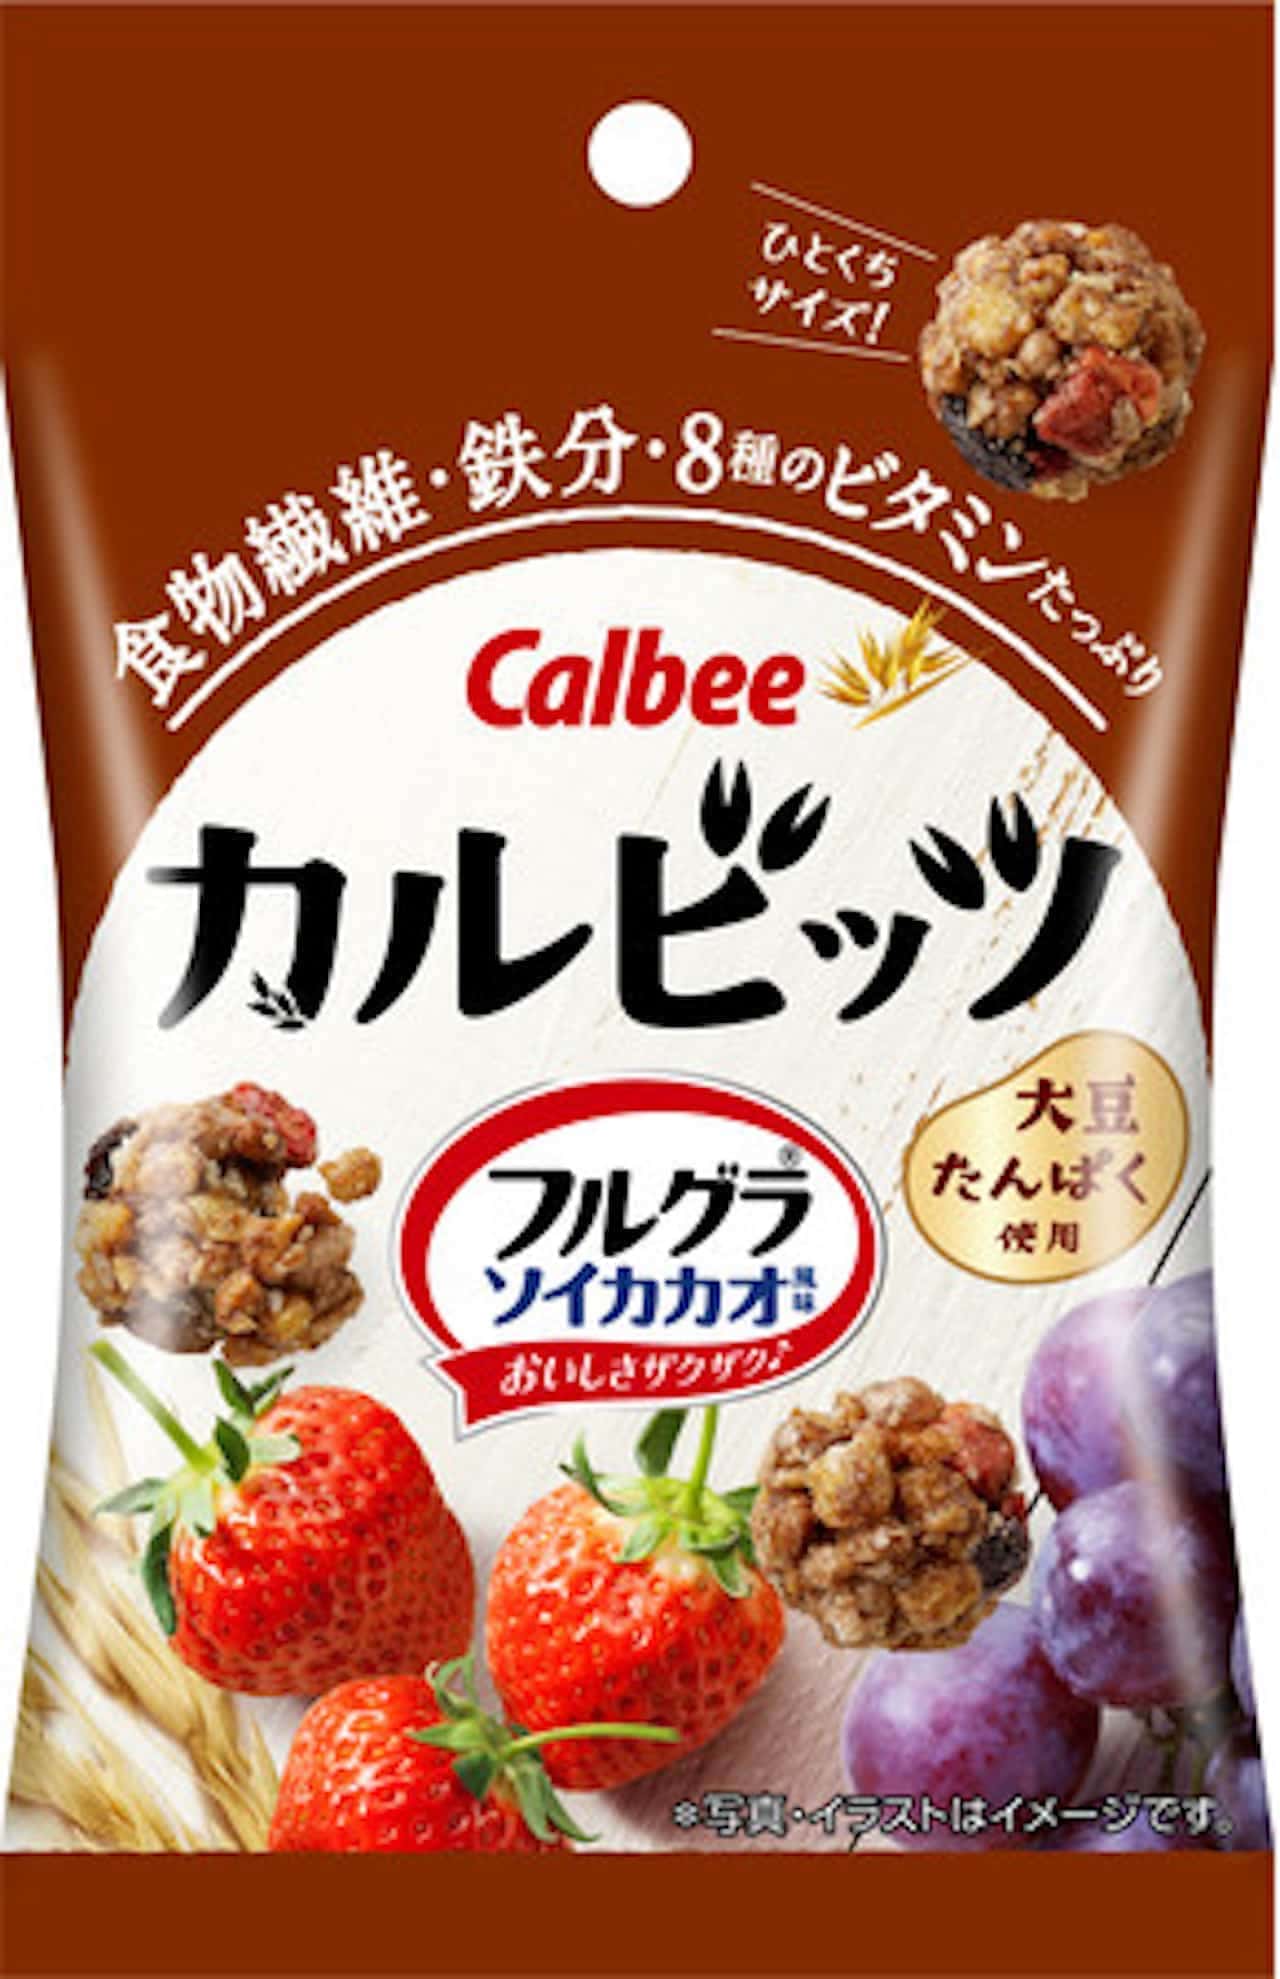 "Calbee Frugra Soi Cacao Flavor" from Calbee